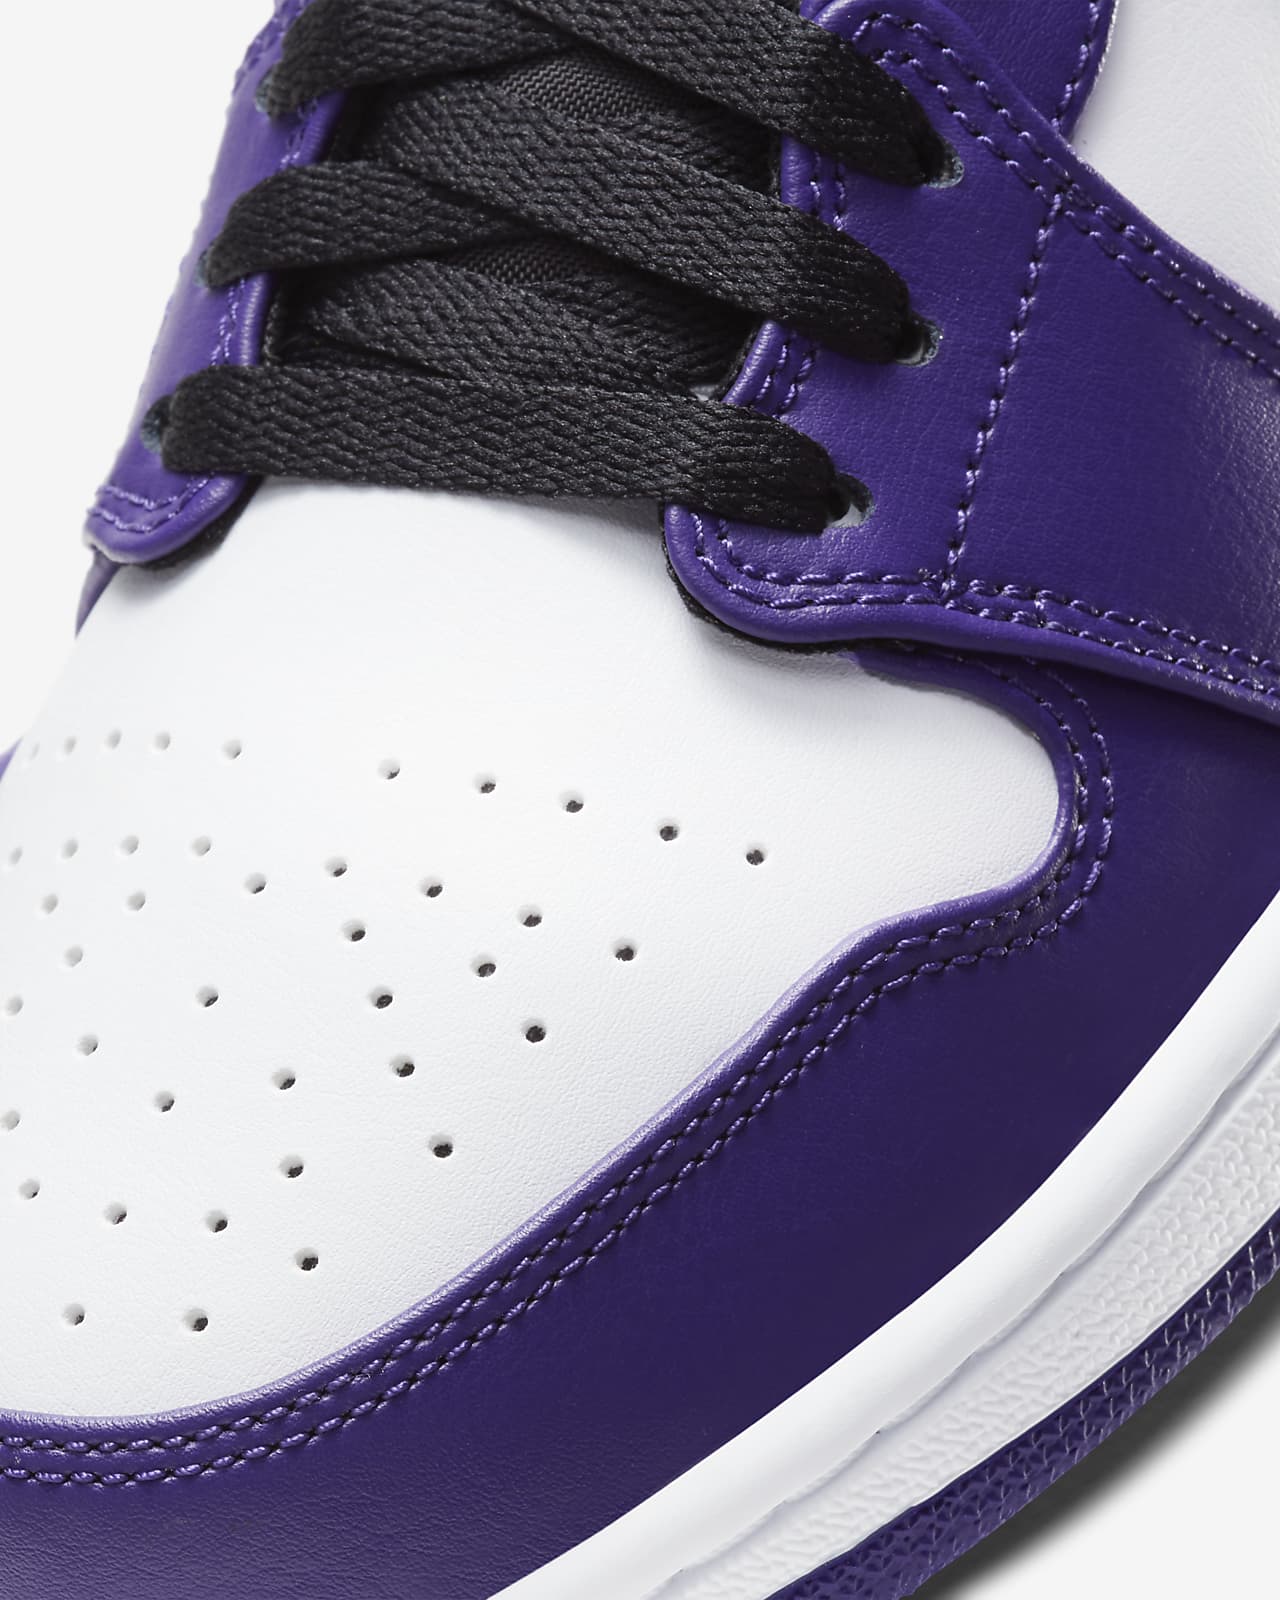 nike-air-jordan-1-low-court-purple-white-553558-500-release-2020